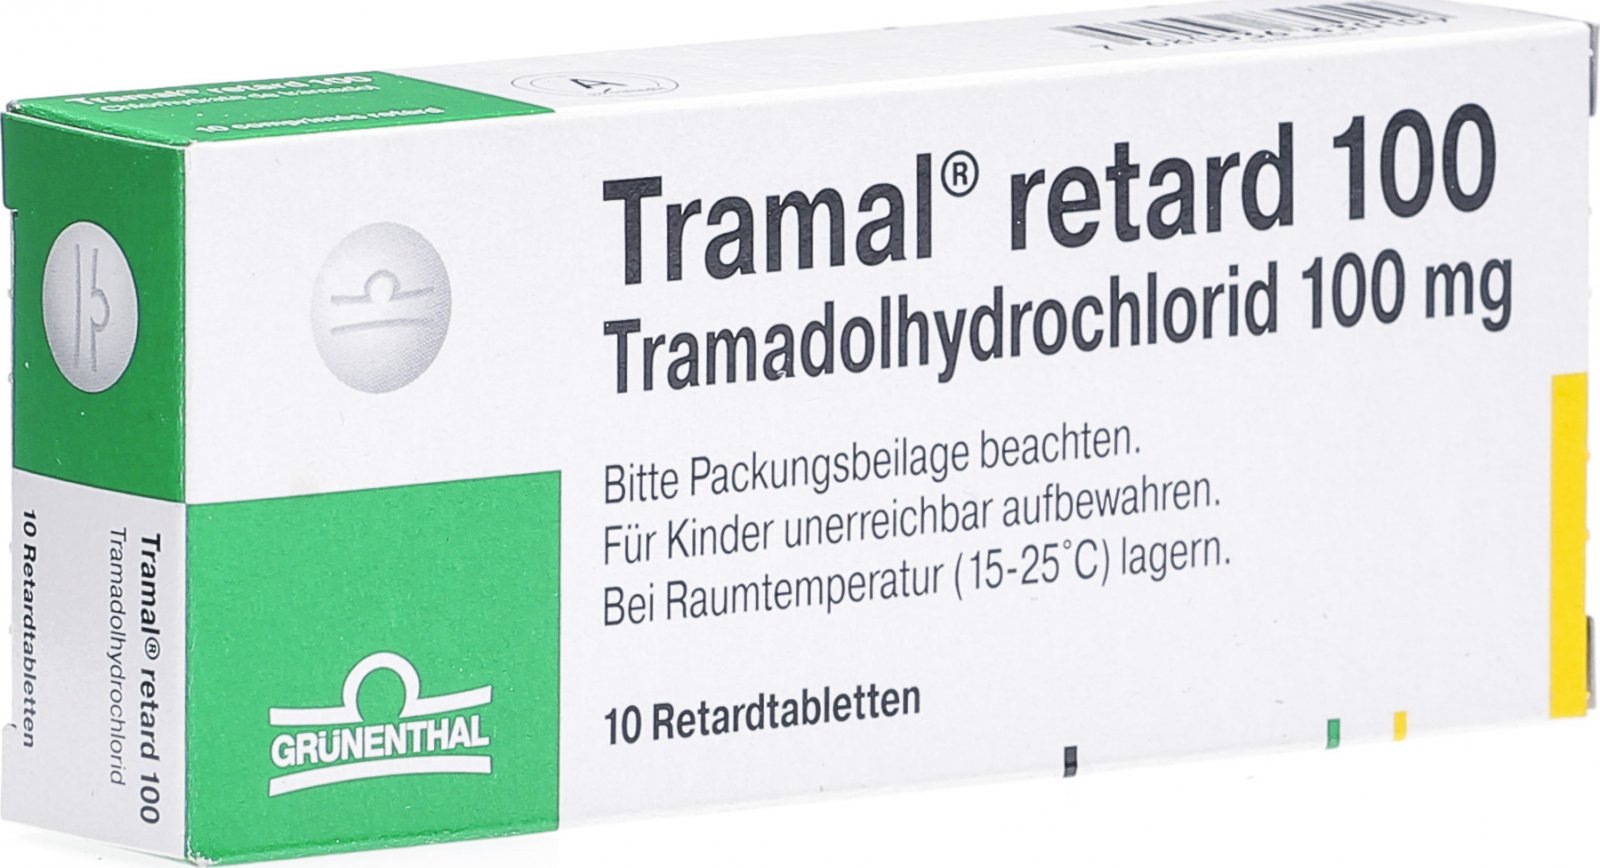 Tramal Retard Tabletten 100mg 10 Stuck In Der Adler Apotheke